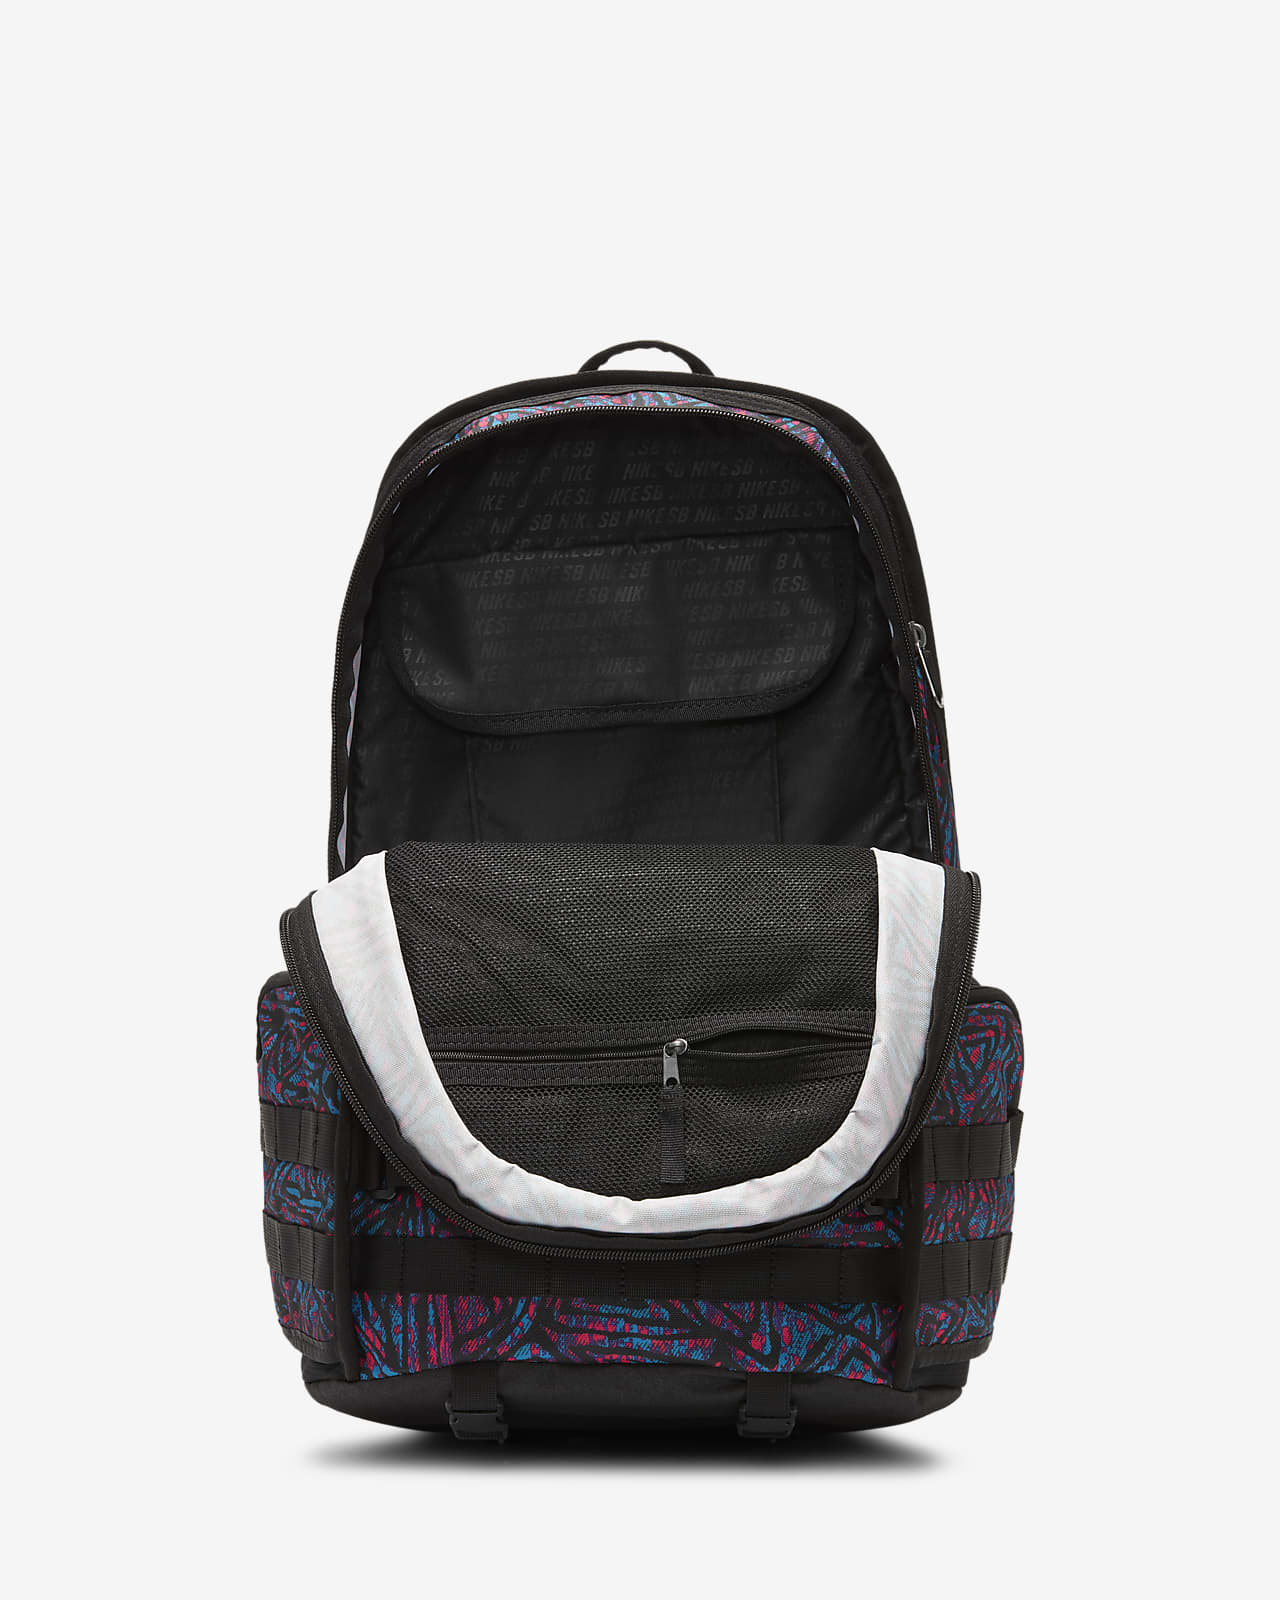 Nike Sb Rpm Backpack Black Online